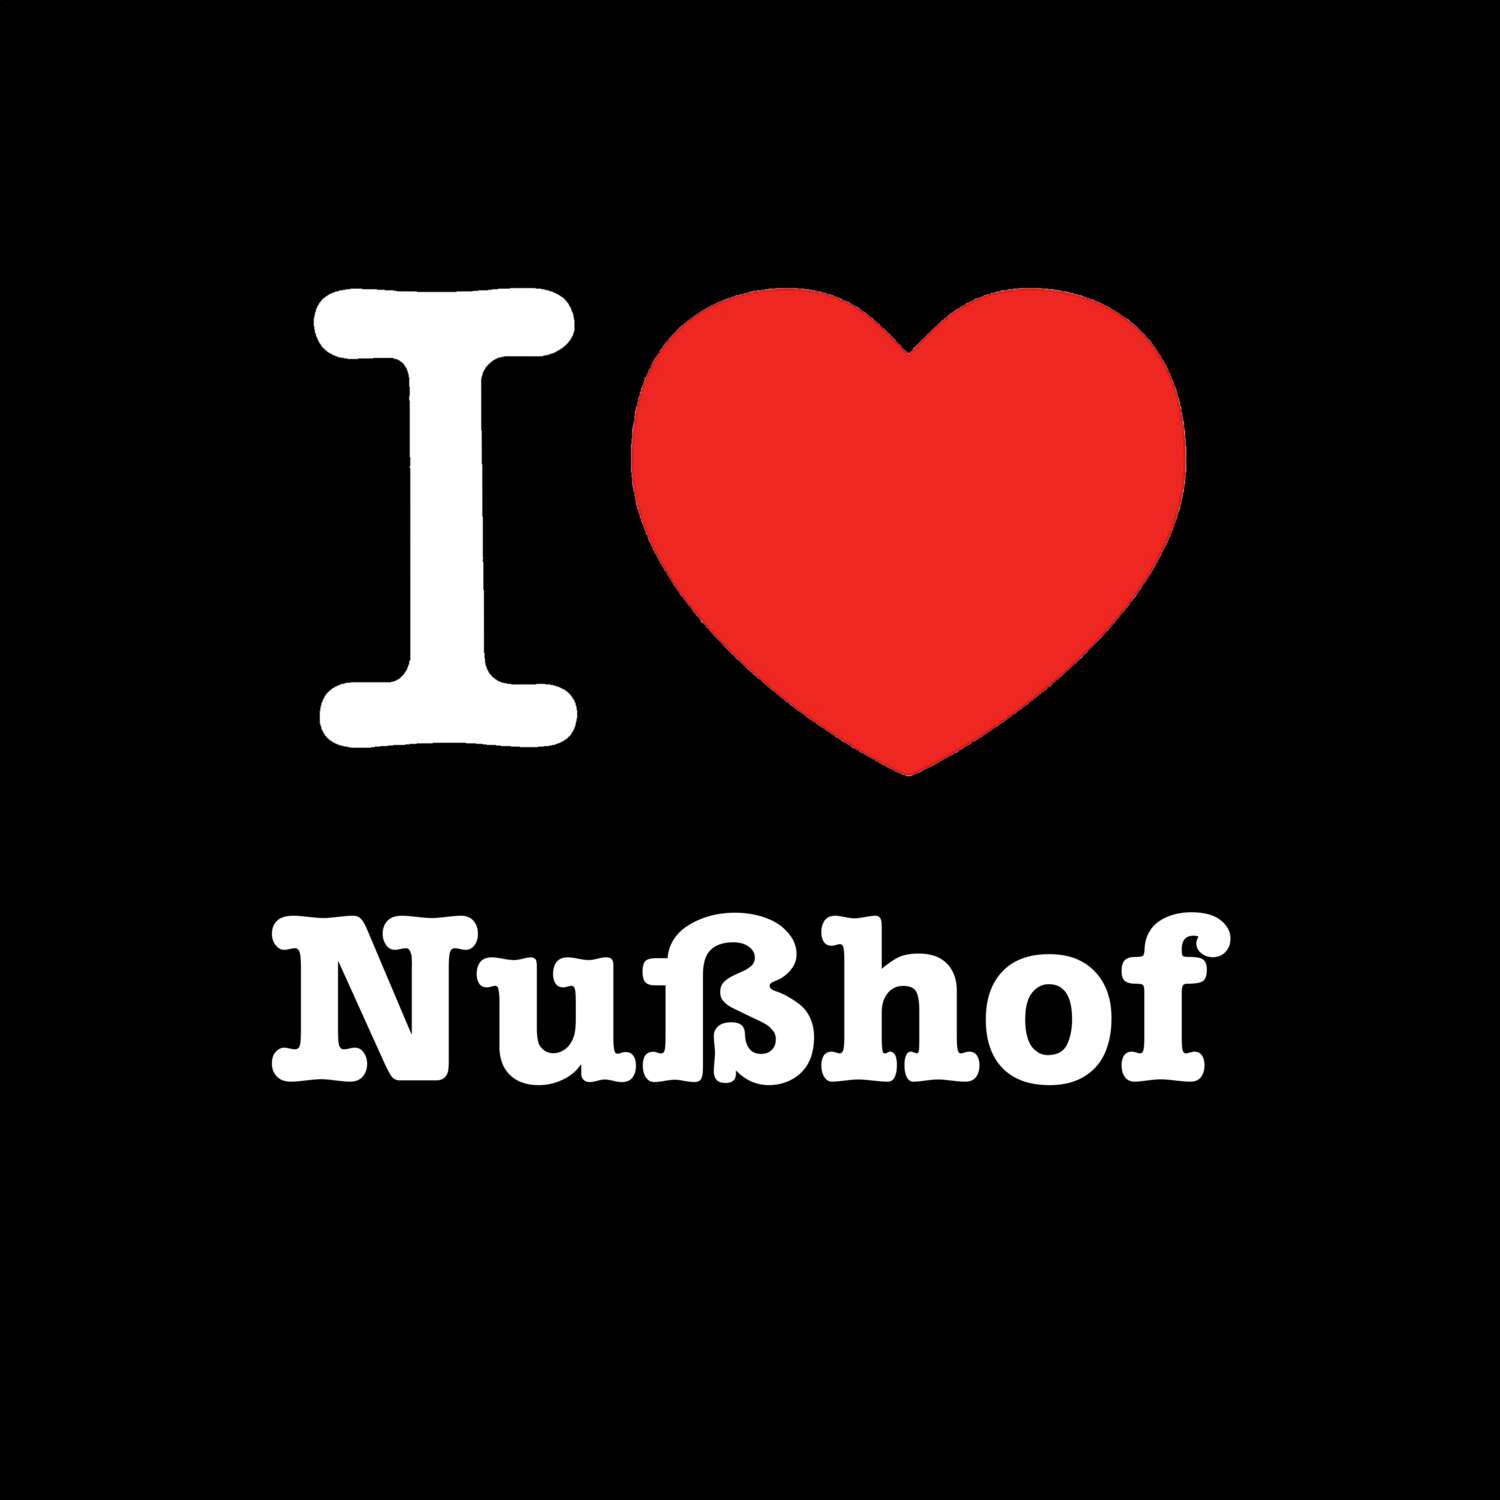 Nußhof T-Shirt »I love«